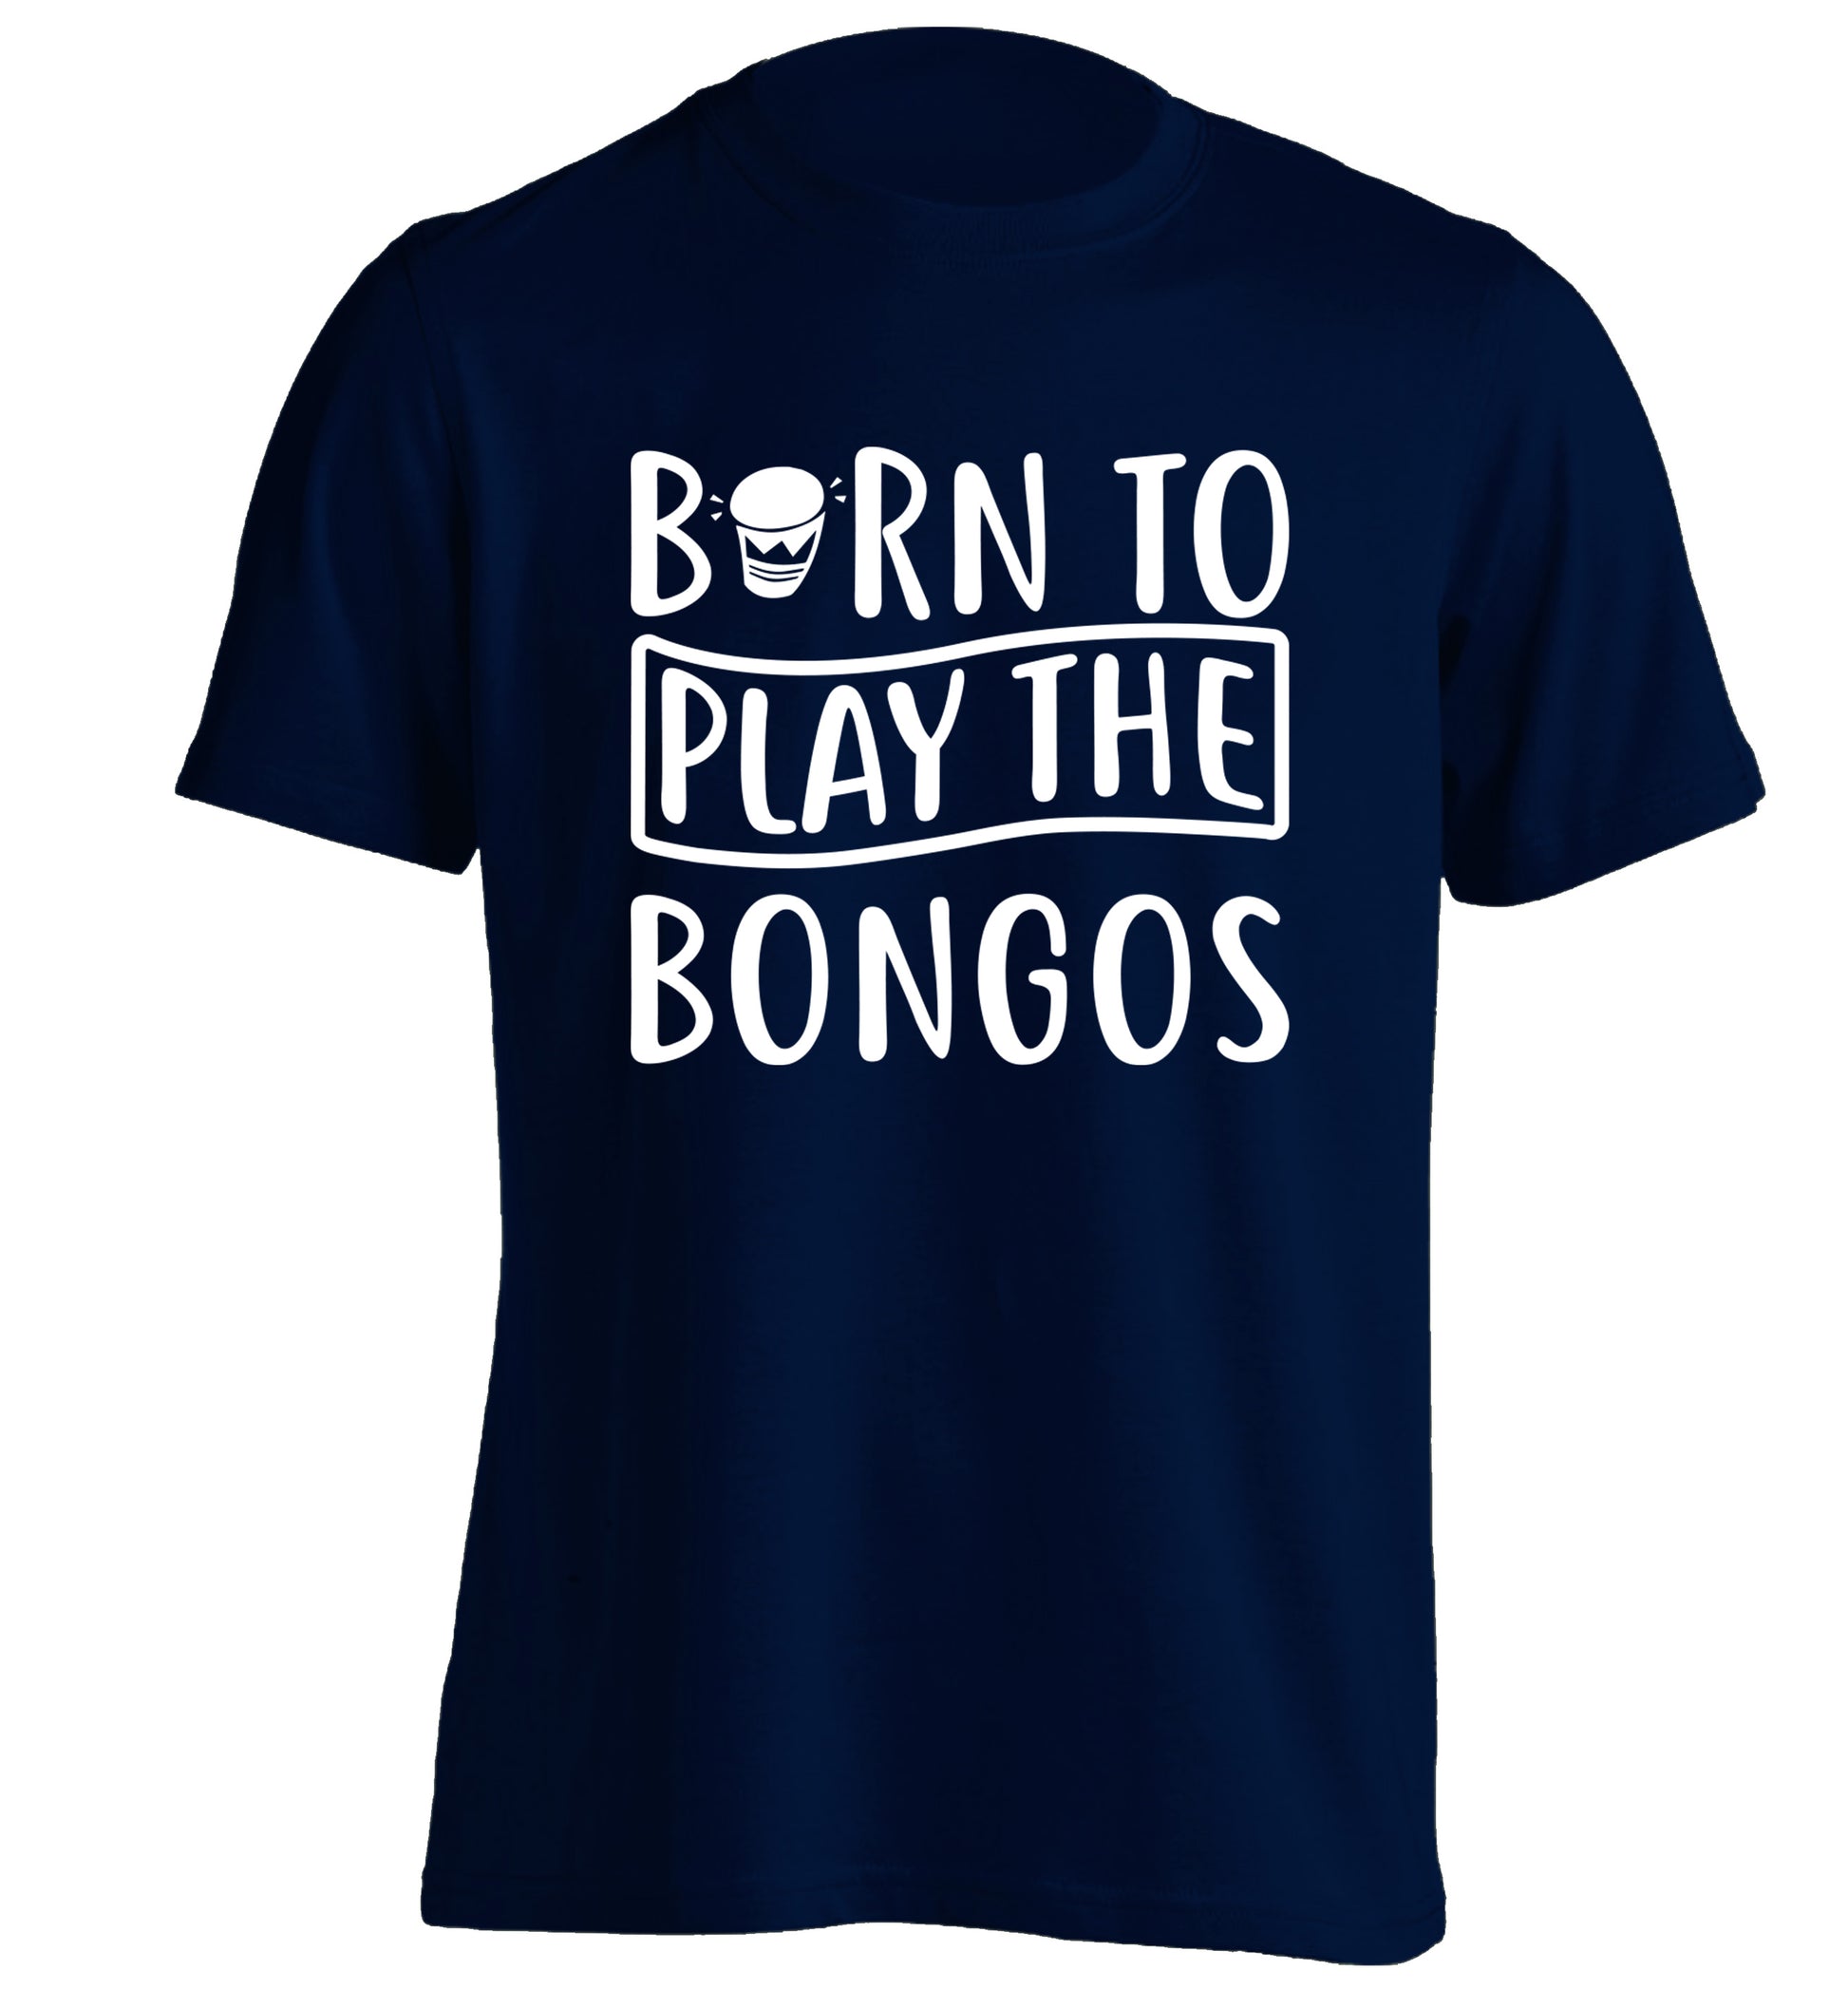 Born to play the bongos adults unisex navy Tshirt 2XL